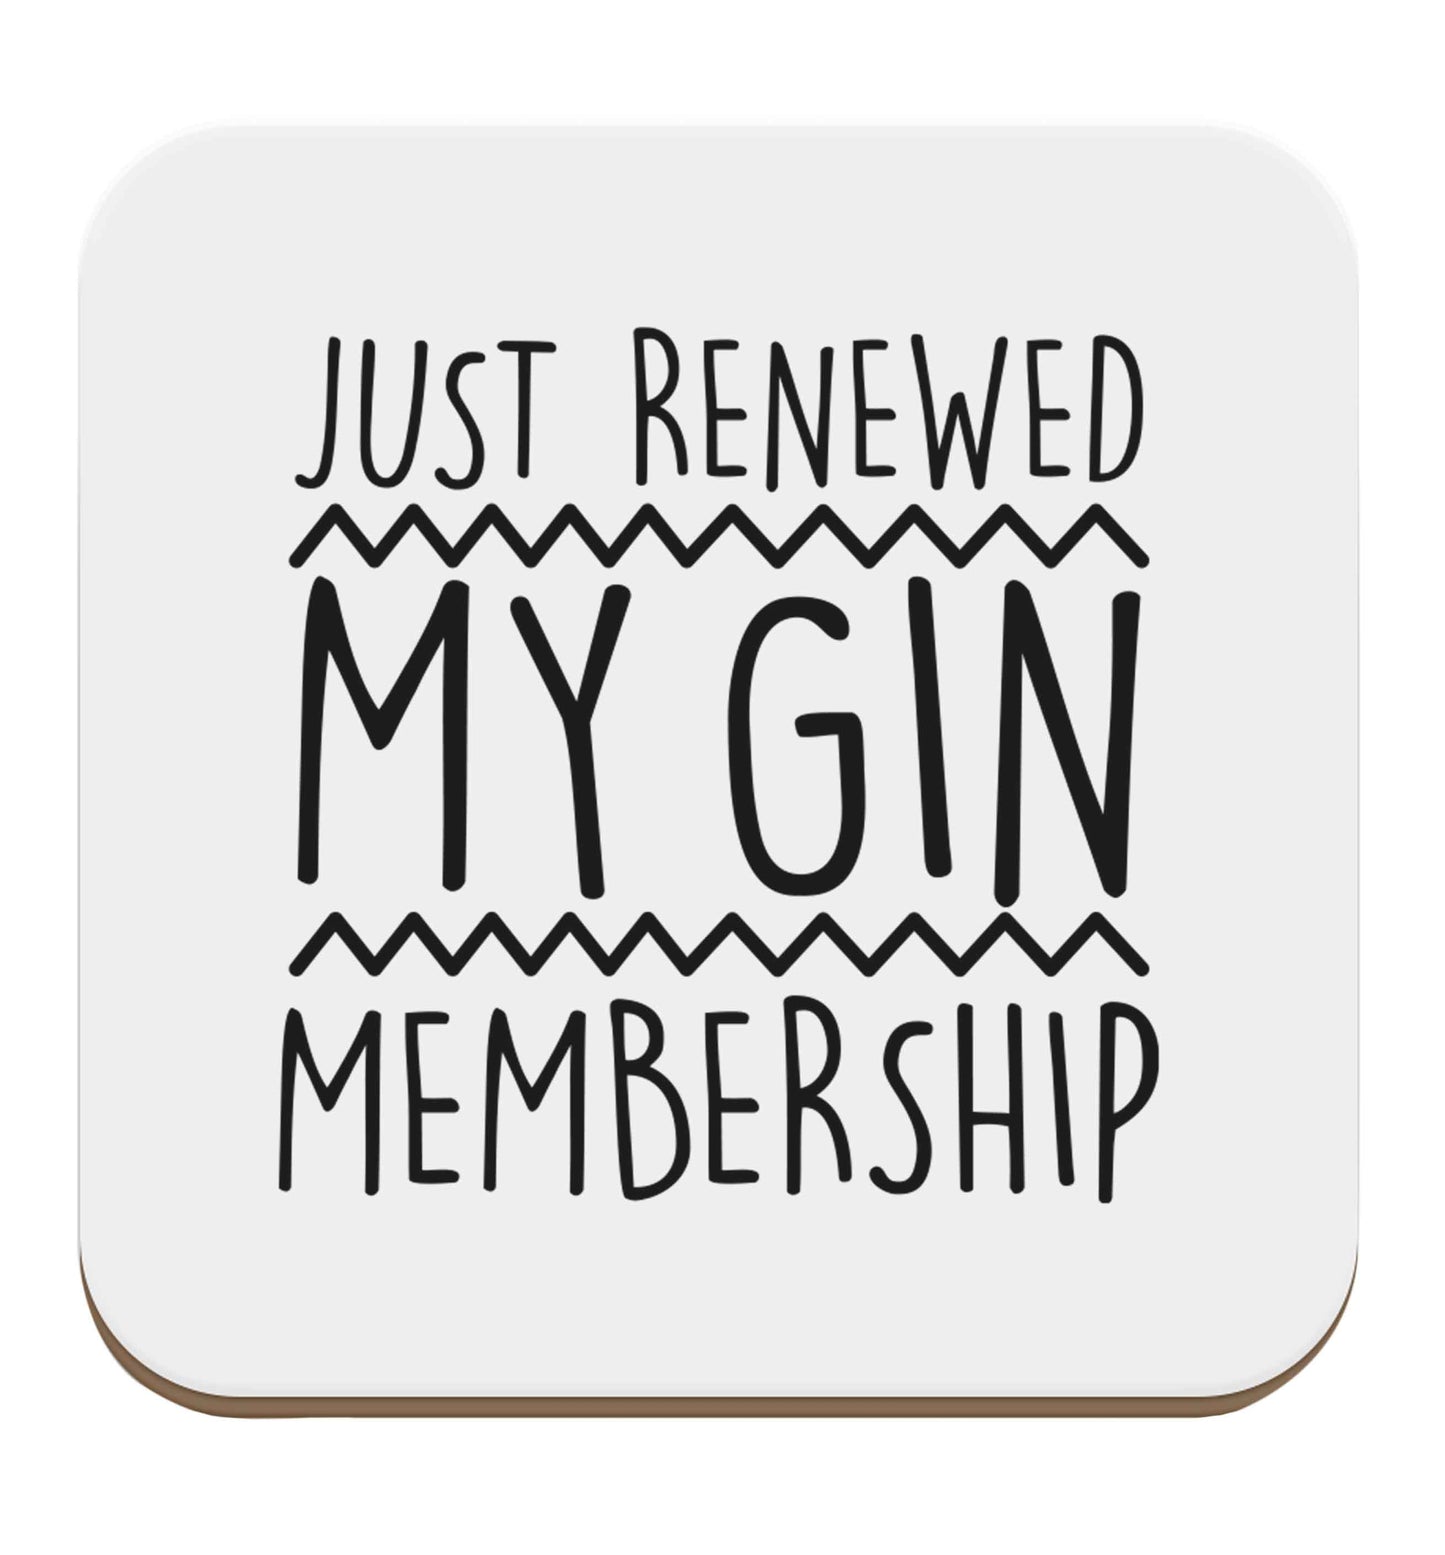 Just renewed my gin membership set of four coasters